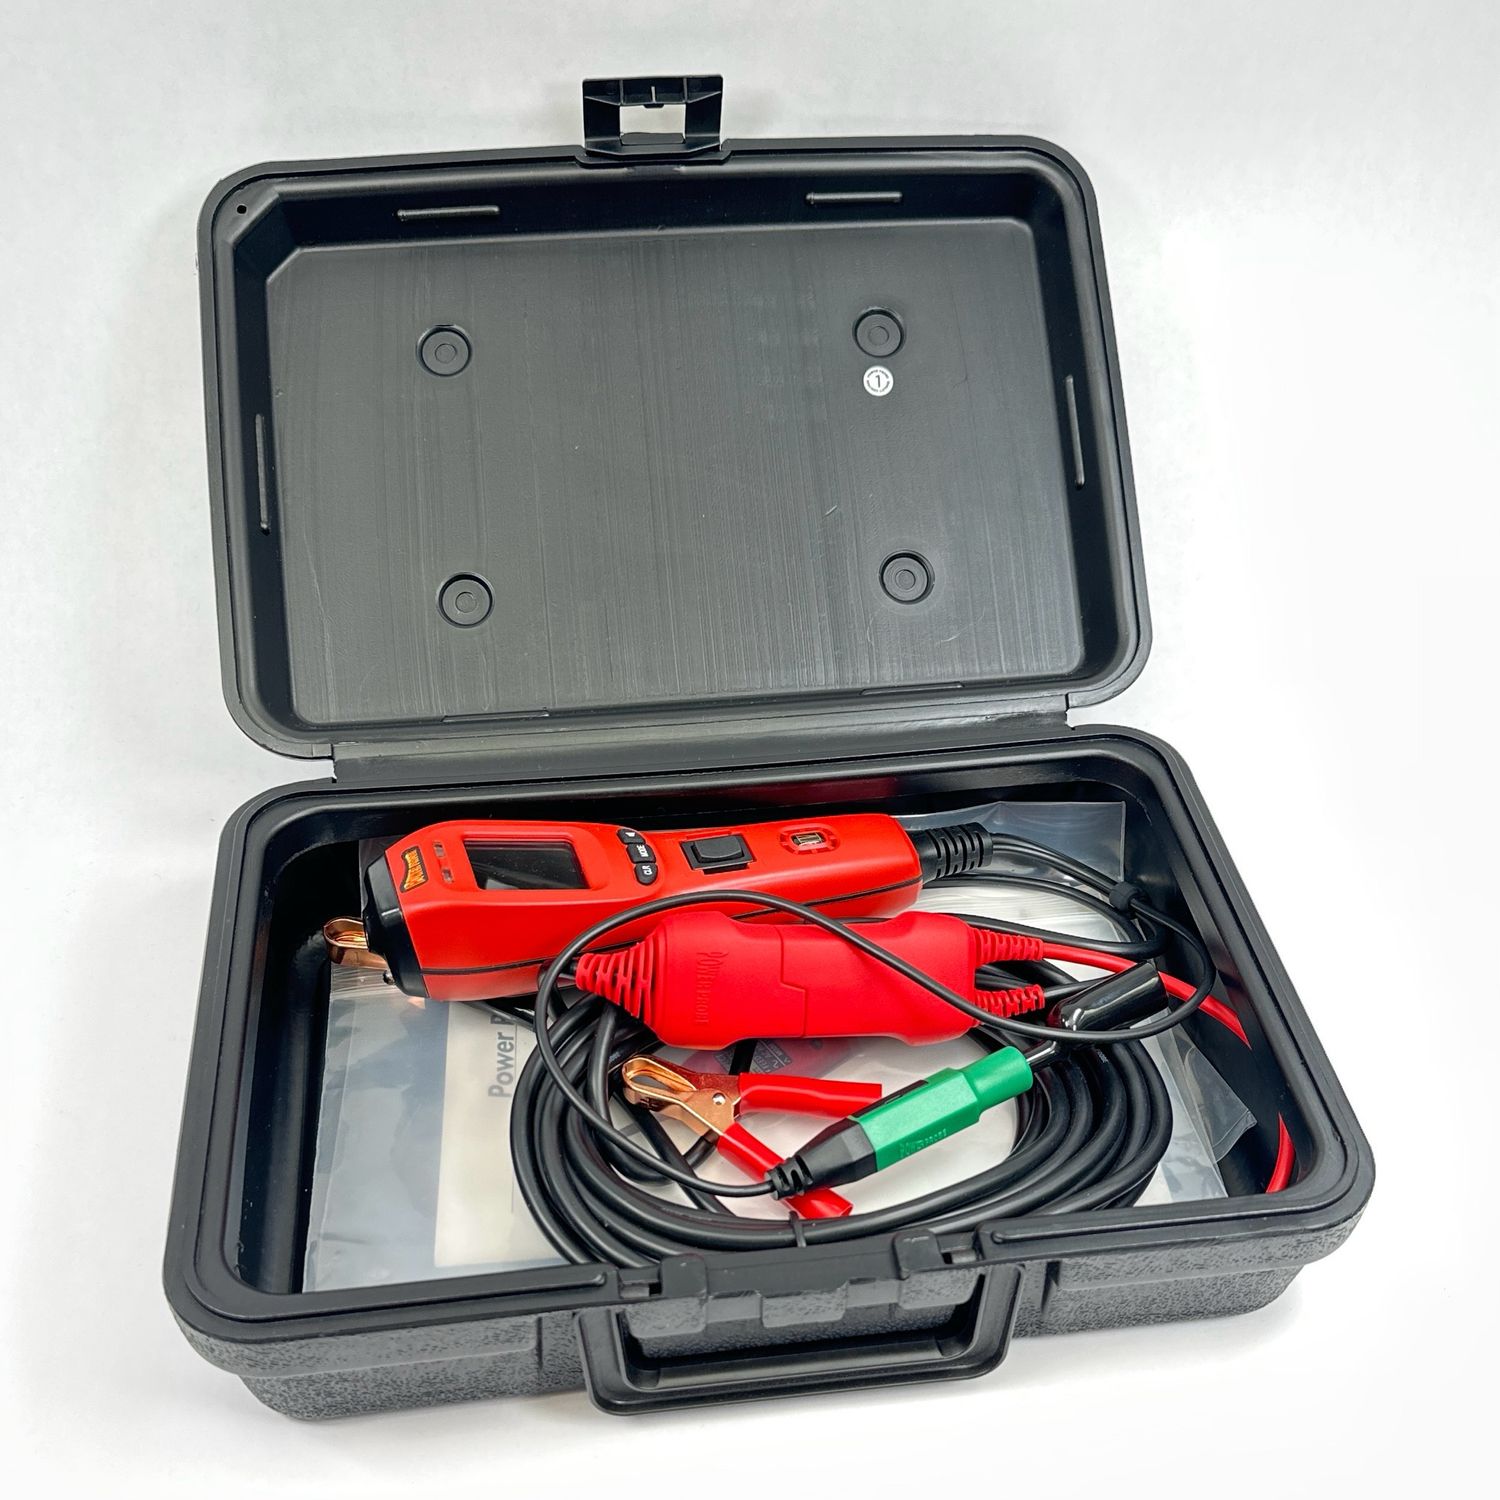 New Power Probe IV Diagnostic Circuit Tester, Power Probe 4